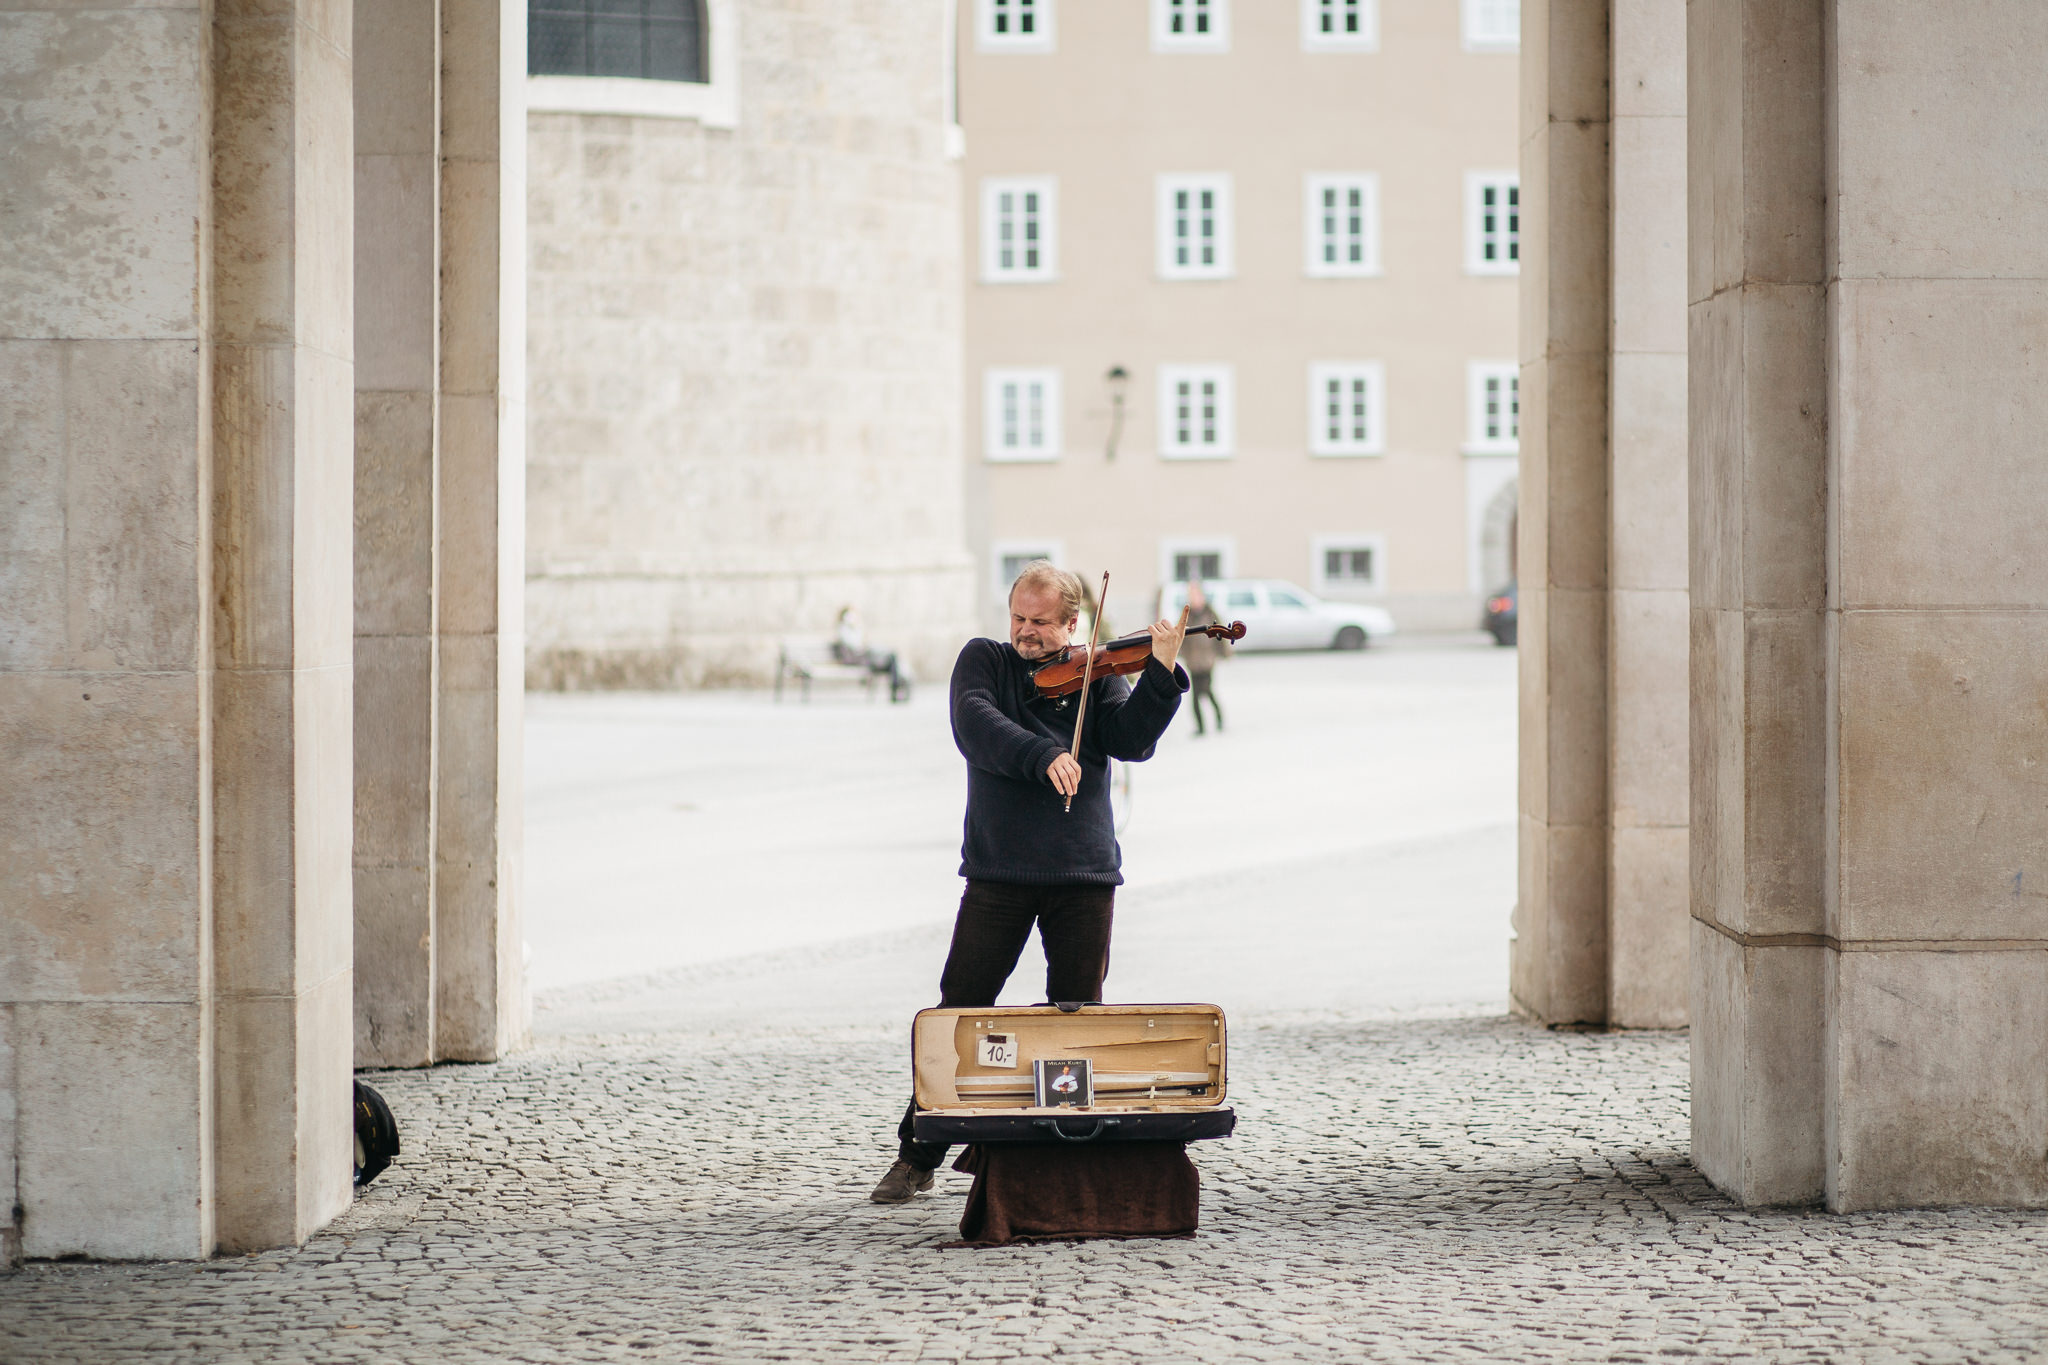 man playing violin in street